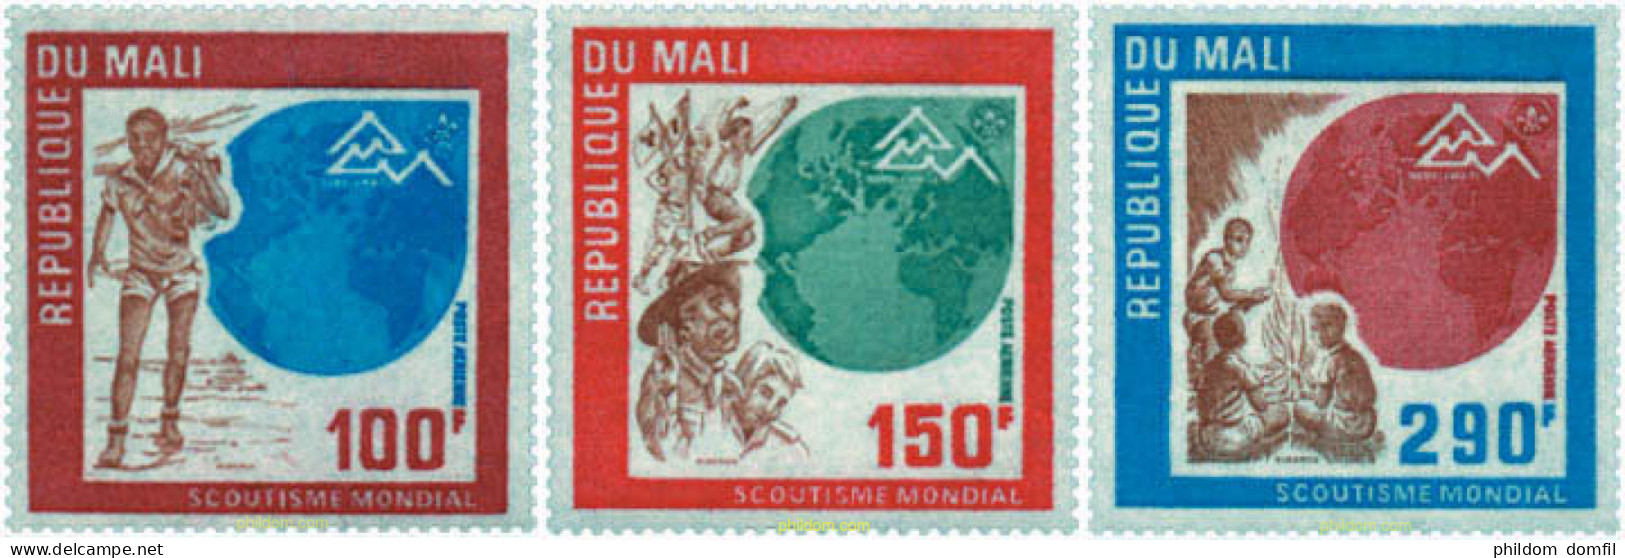 38134 MNH MALI 1975 JAMBOREE MUNDIAL EN NORUEGA - Mali (1959-...)